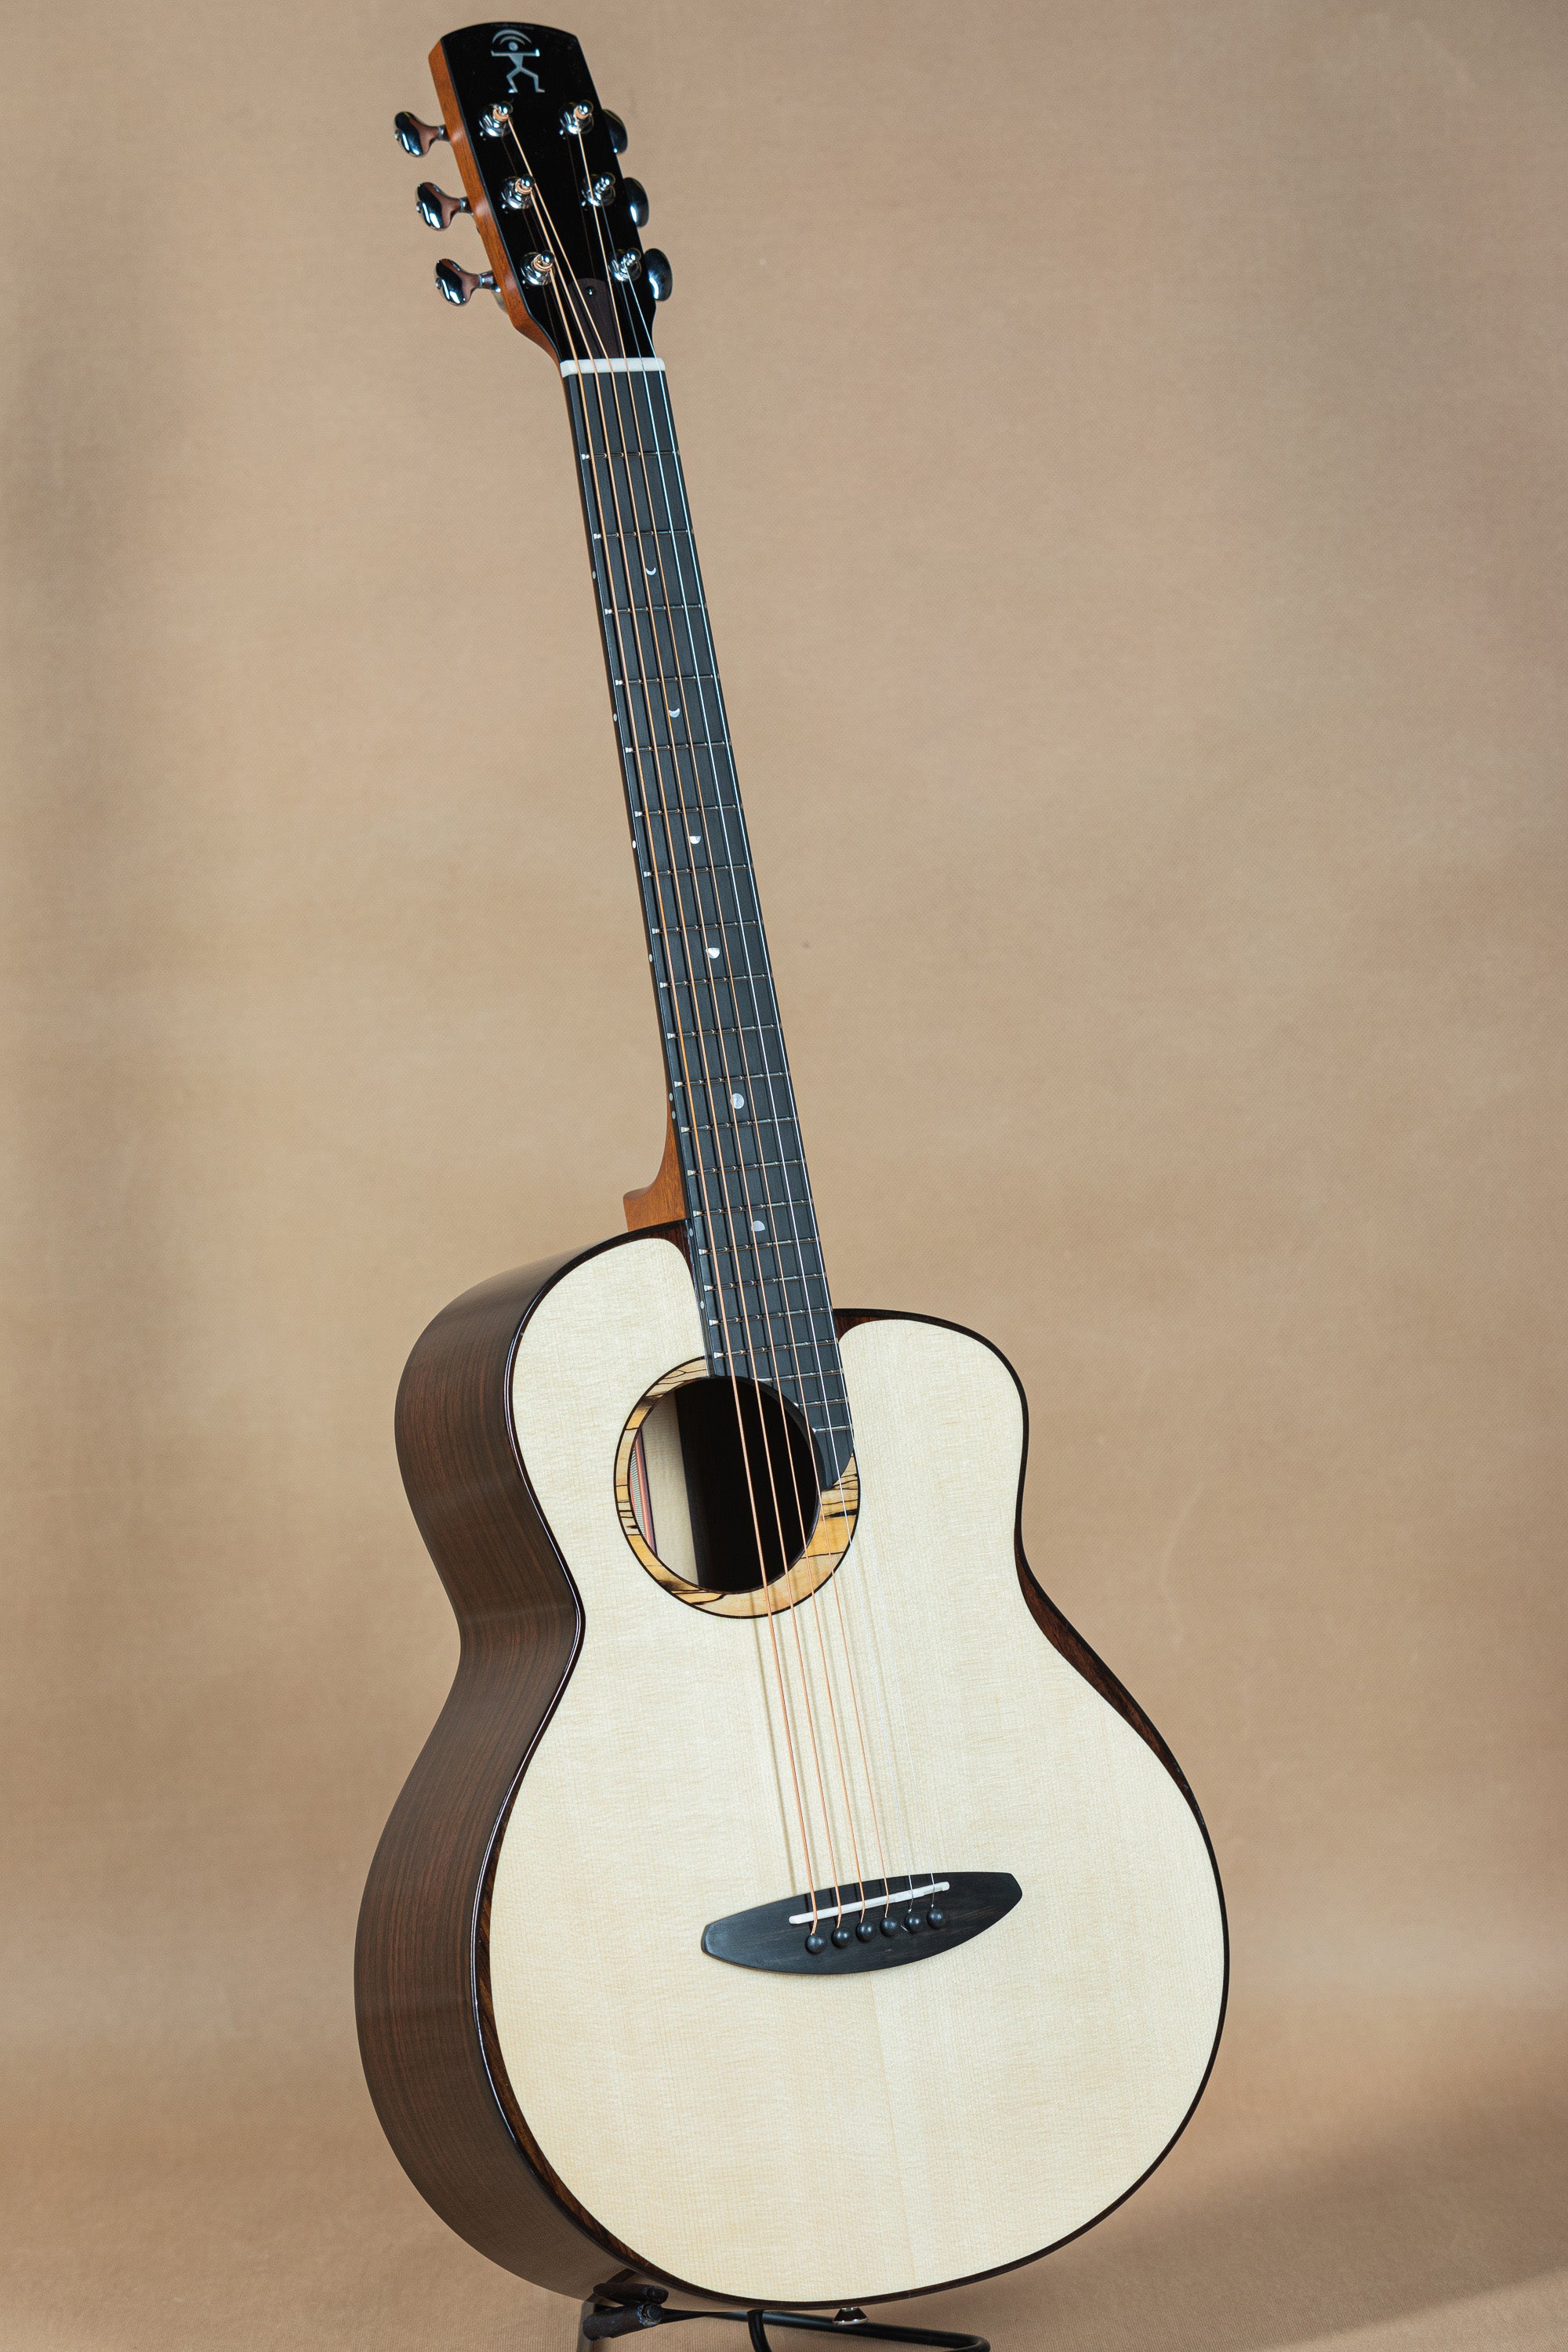 aNueNue M200 Moon Spruce Rosewood Guitar